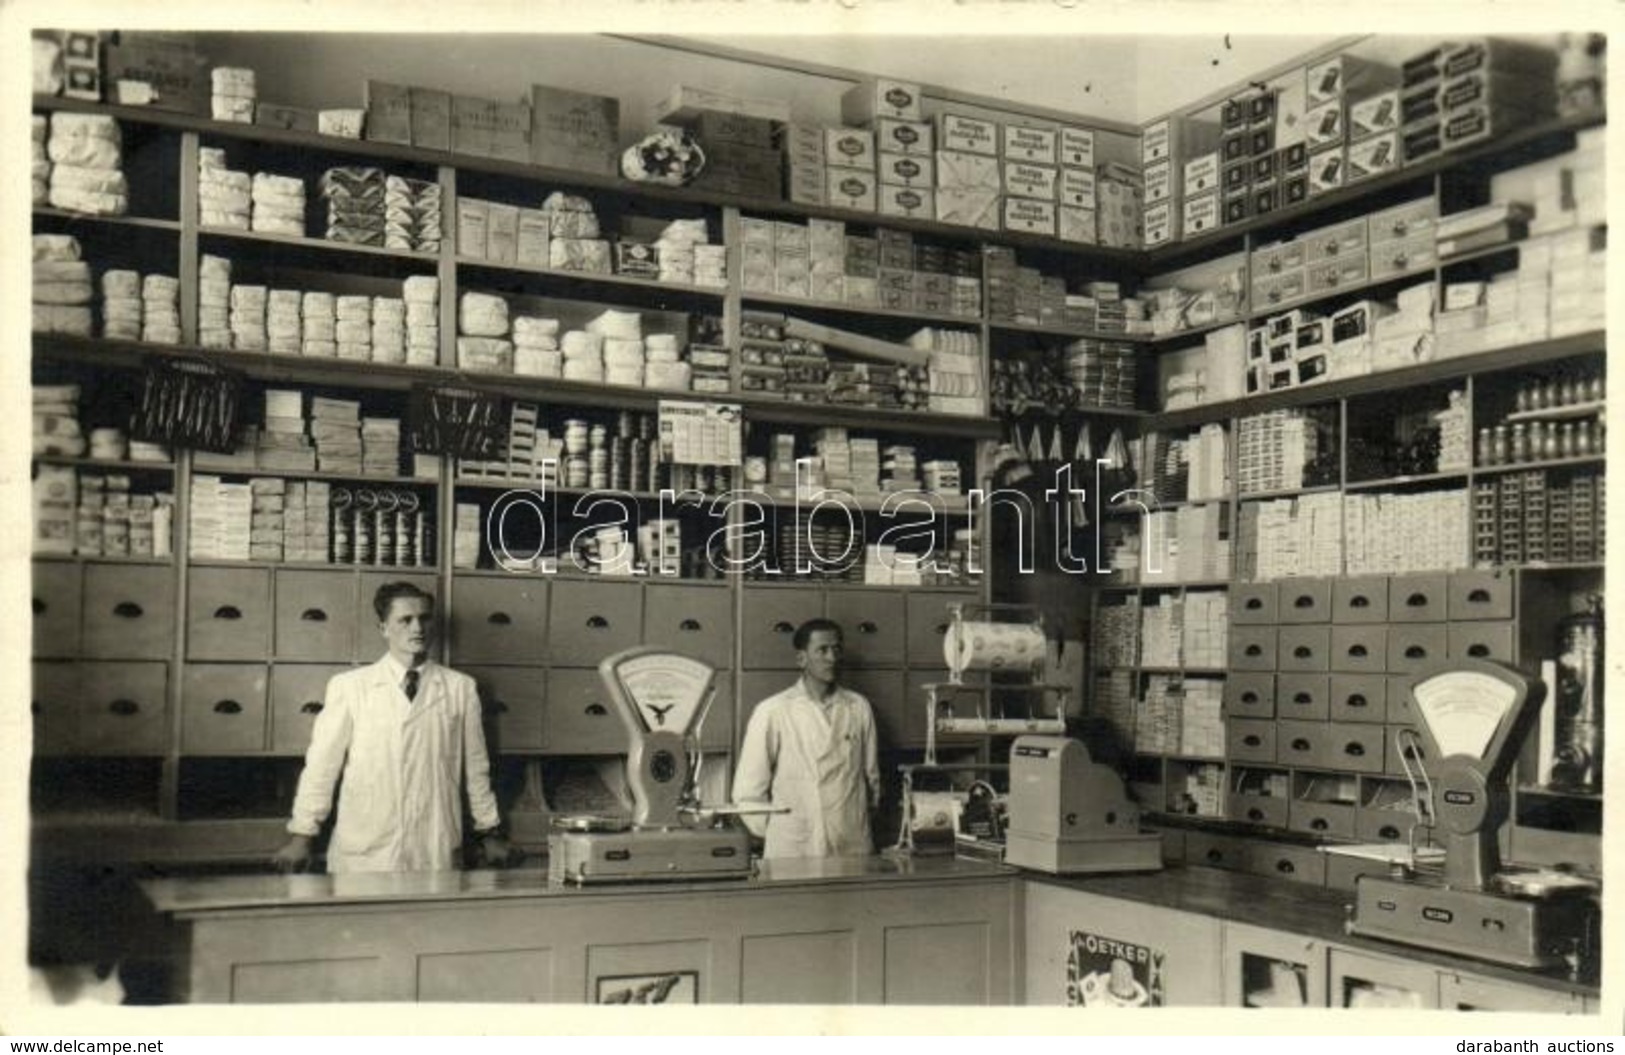 * T2 1941 Dés, Dej; üzlet Belső Eladókkal / Shop Interior With Cashiers. Photo - Sin Clasificación